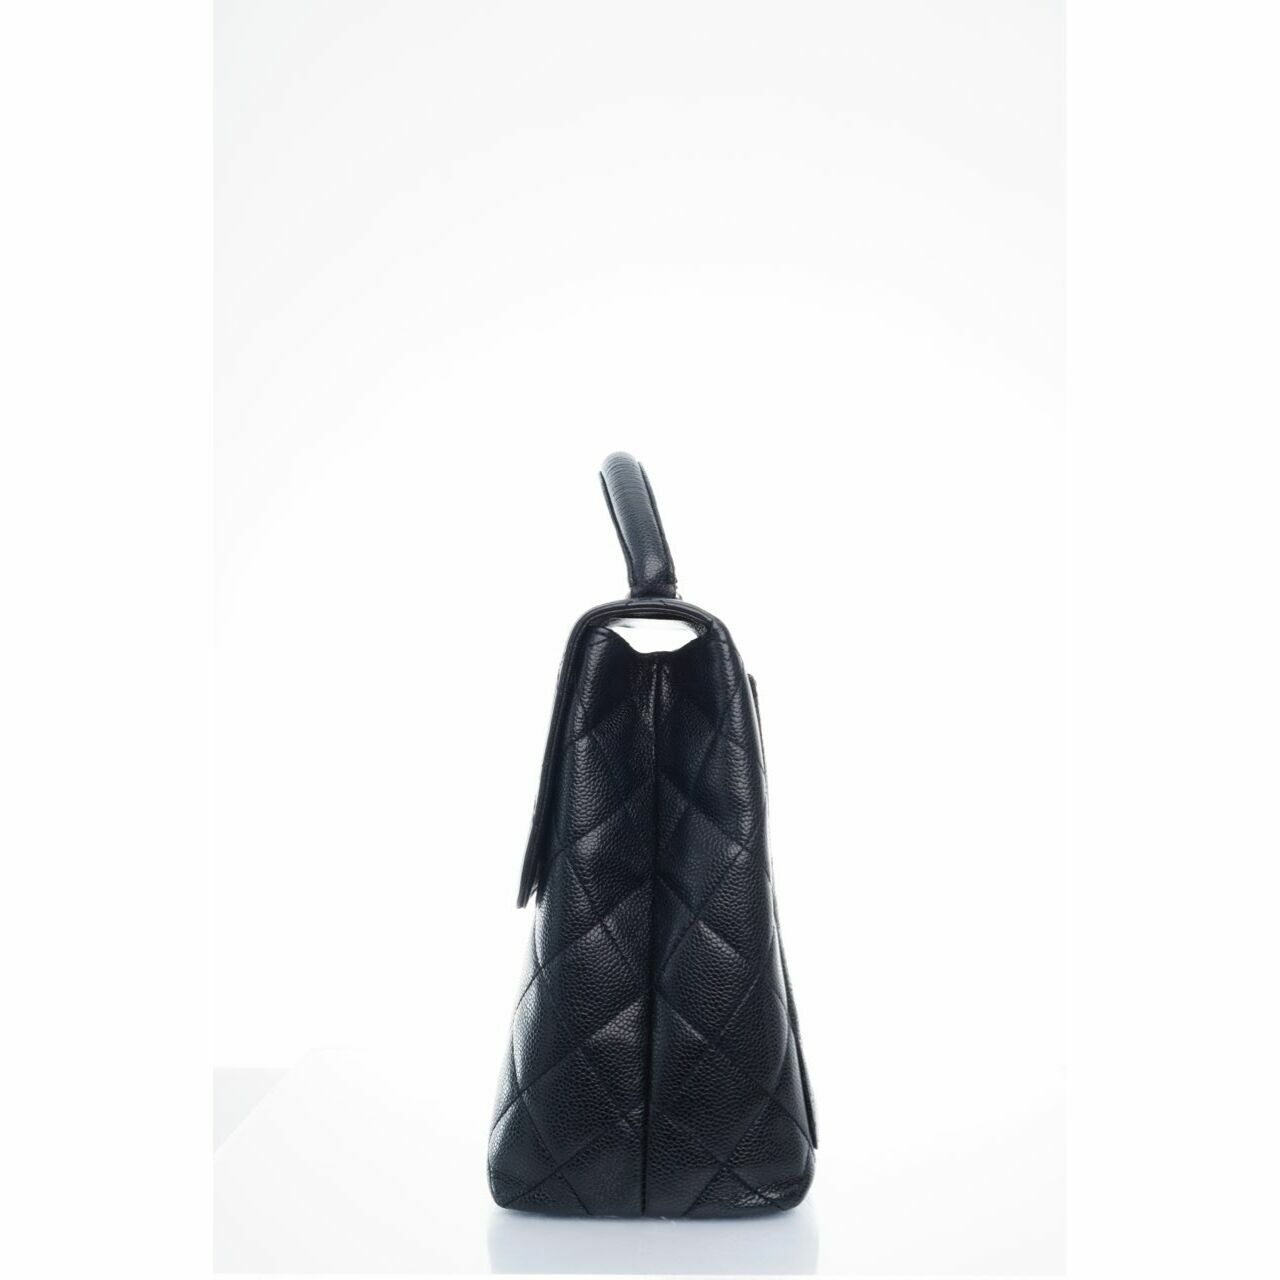 Chanel Metalasse Black Caviar Leather Top Handle Bag #6